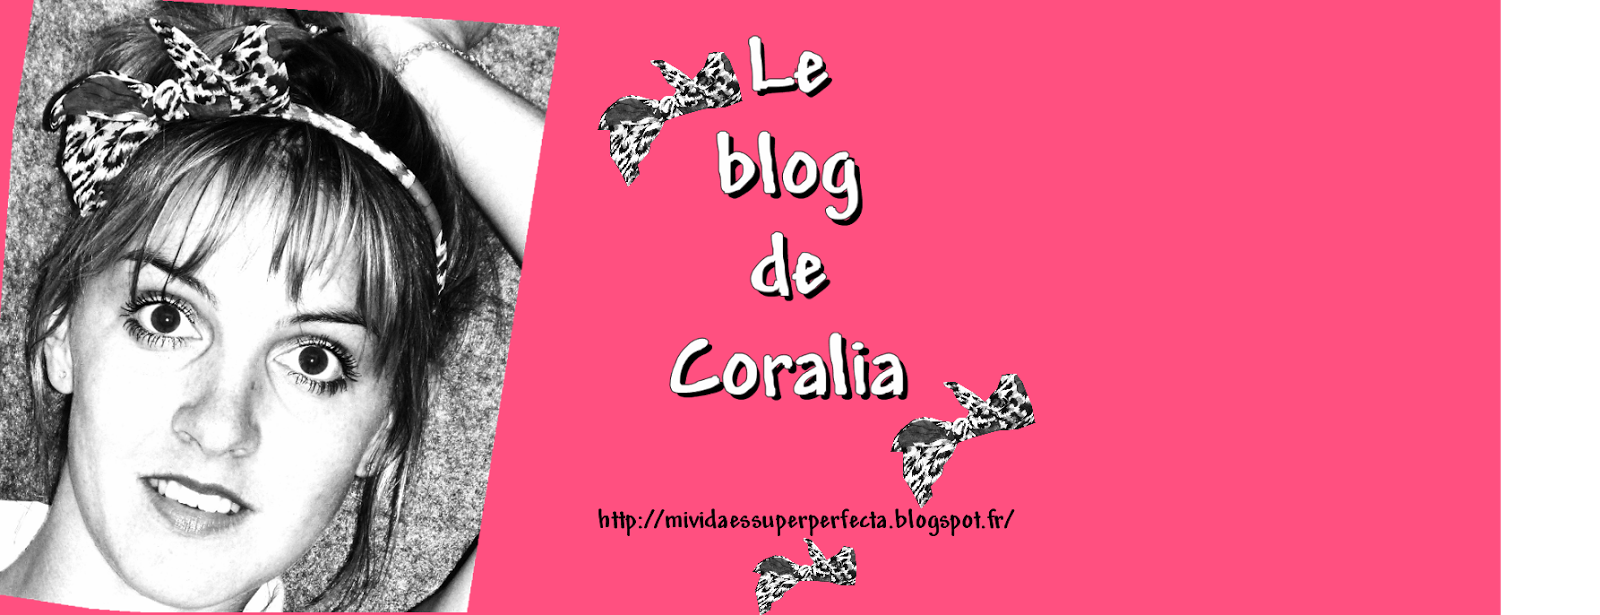 Le blog de Coralia